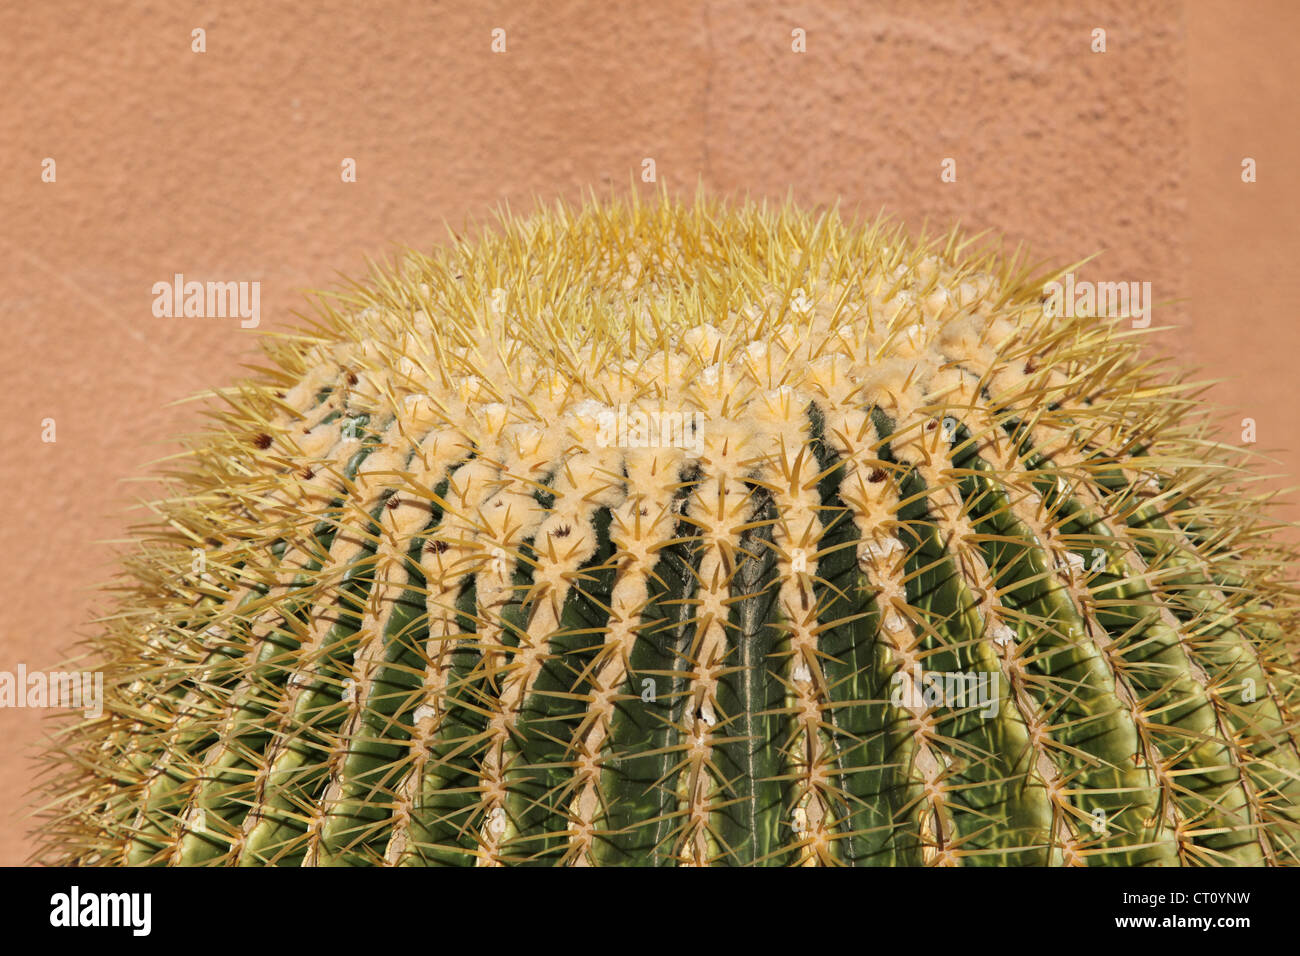 Close up image of cactus Stock Photo